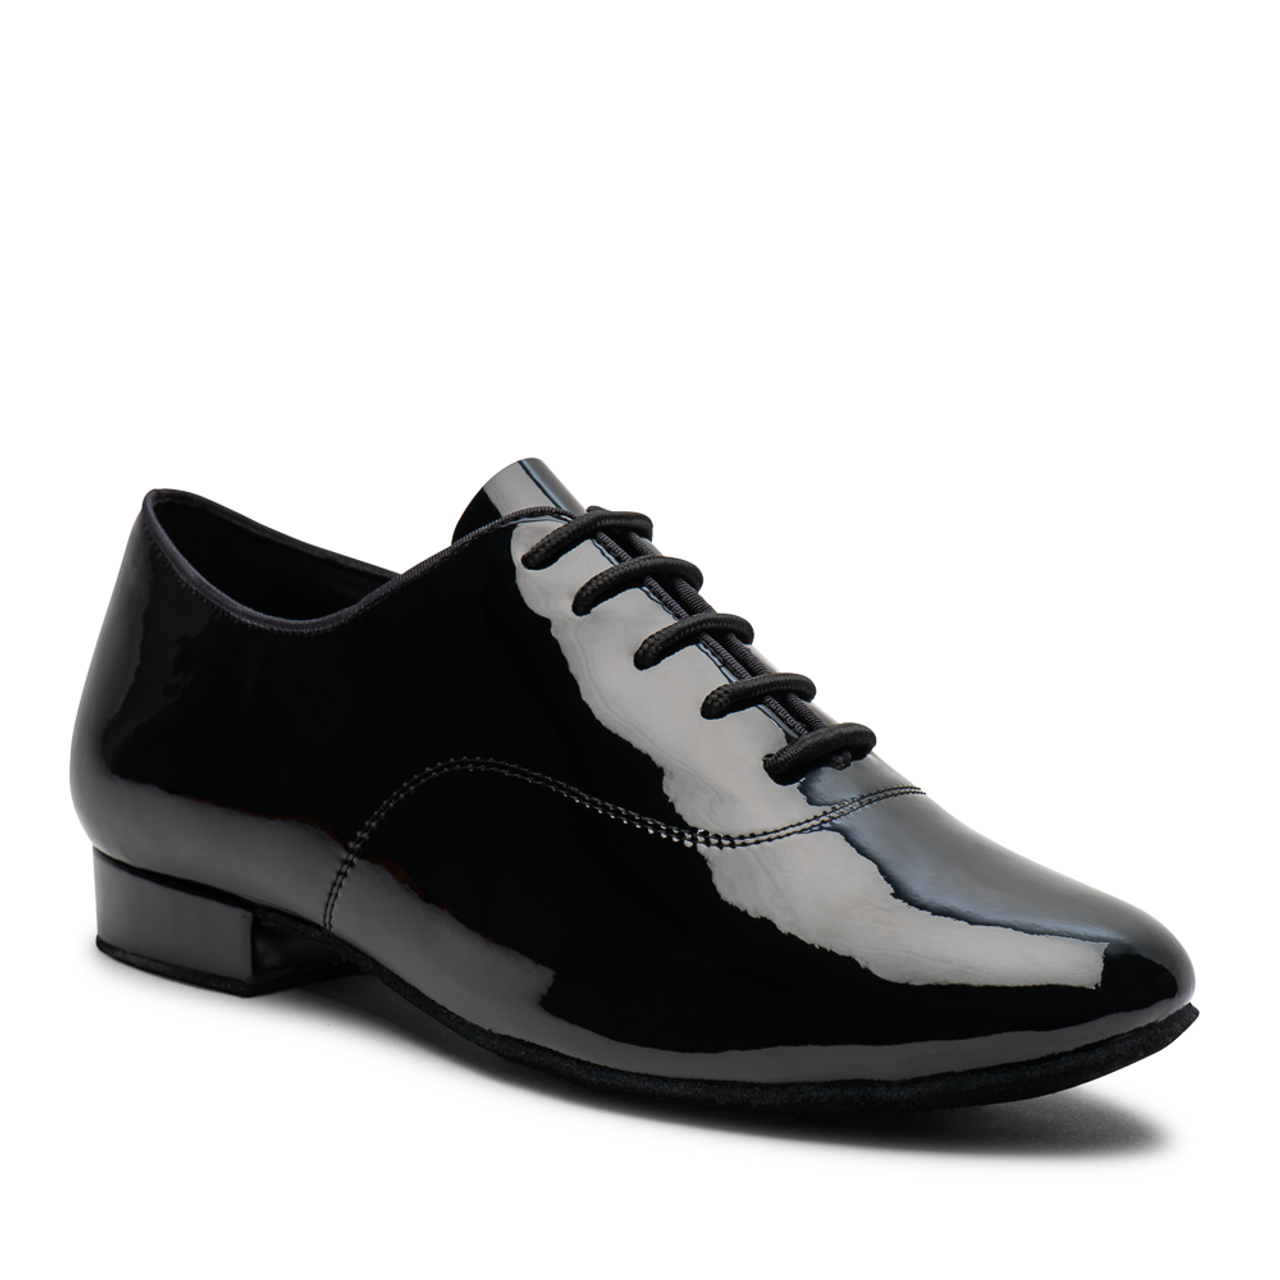 International Dance Shoes IDS Ballroom Dansport Black Calf or Patent Leather Men's Dance Shoe MT